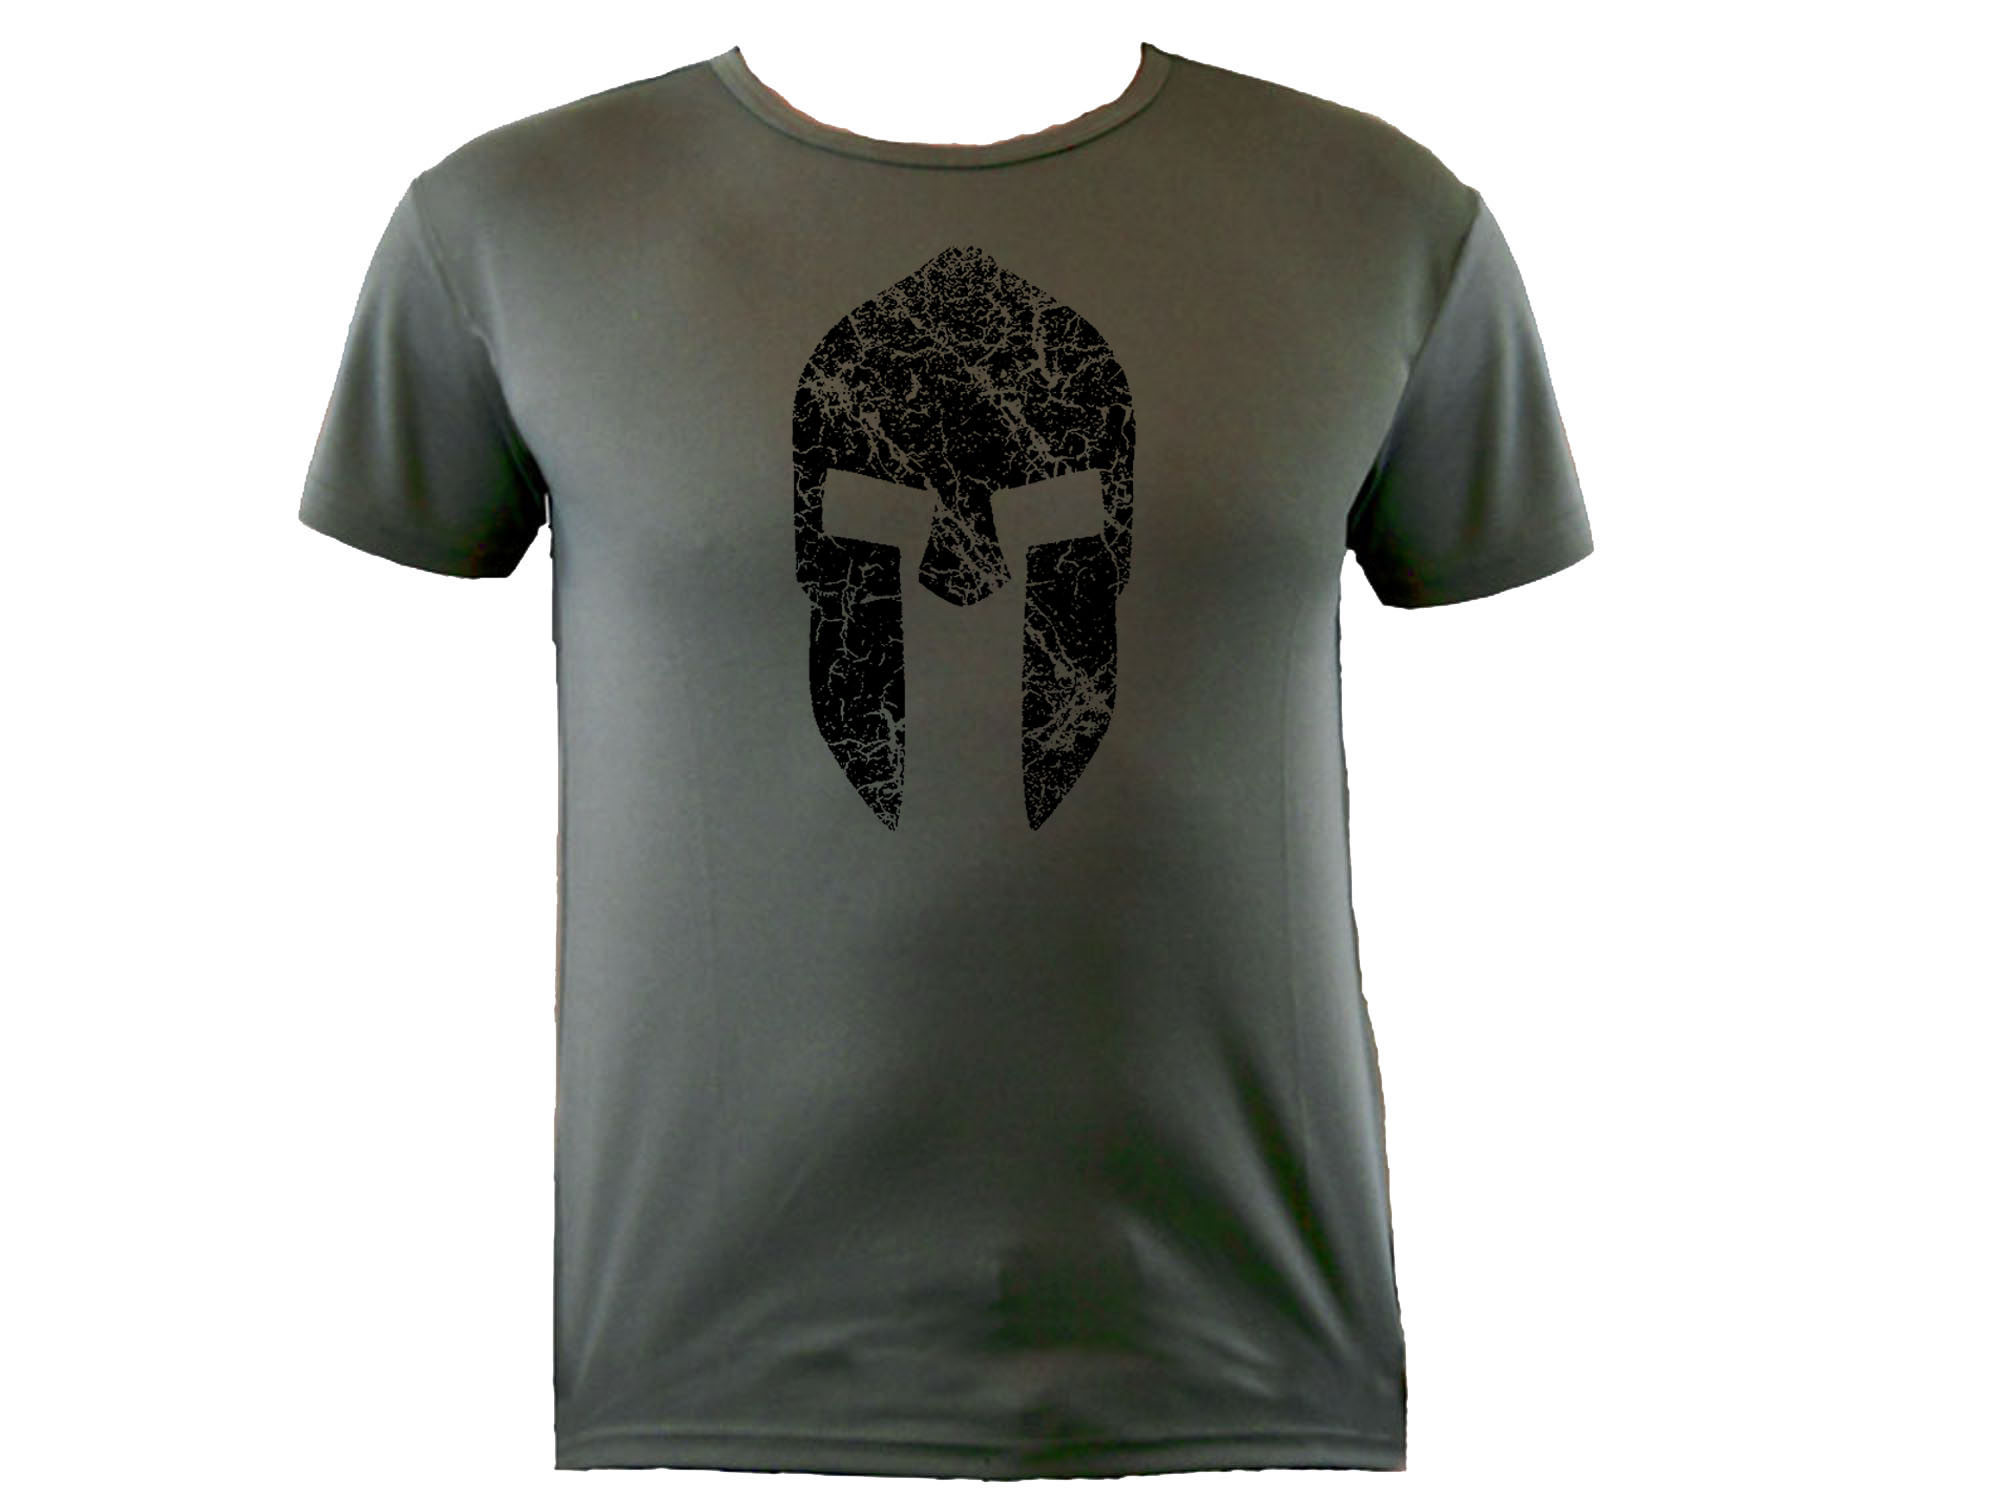 Spartan warrior helmet distressed look moisture wicking t-shirt